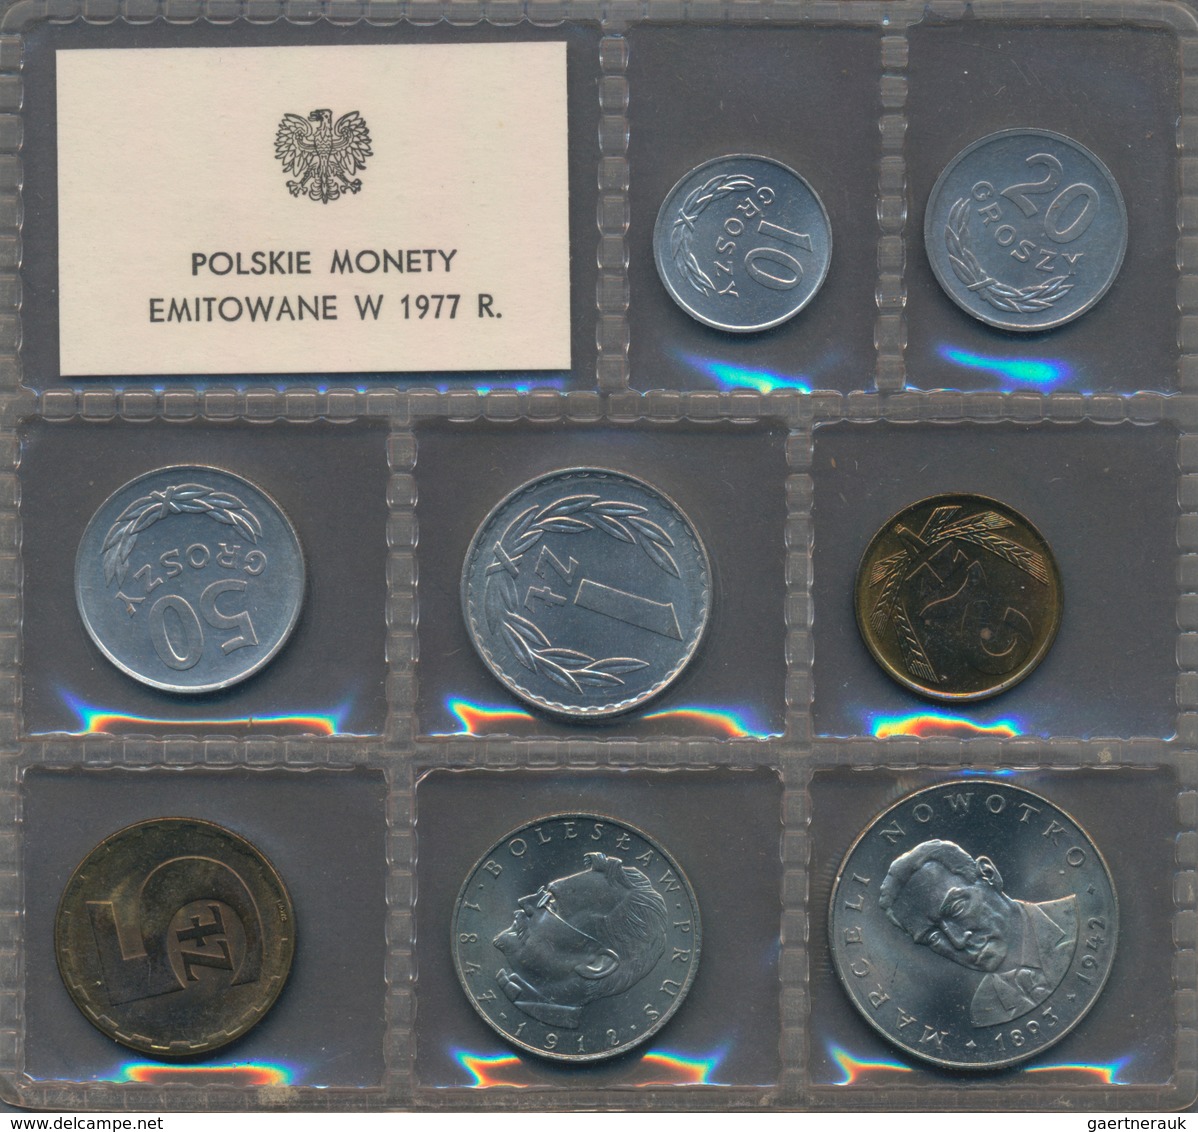 Polen: Lot 3 Sätze POLSKIE MONETY. 1-Obiegowe, 2-Emitowane W 1977 R, 3-Aluminowe. Alle Münzen In Fol - Pologne